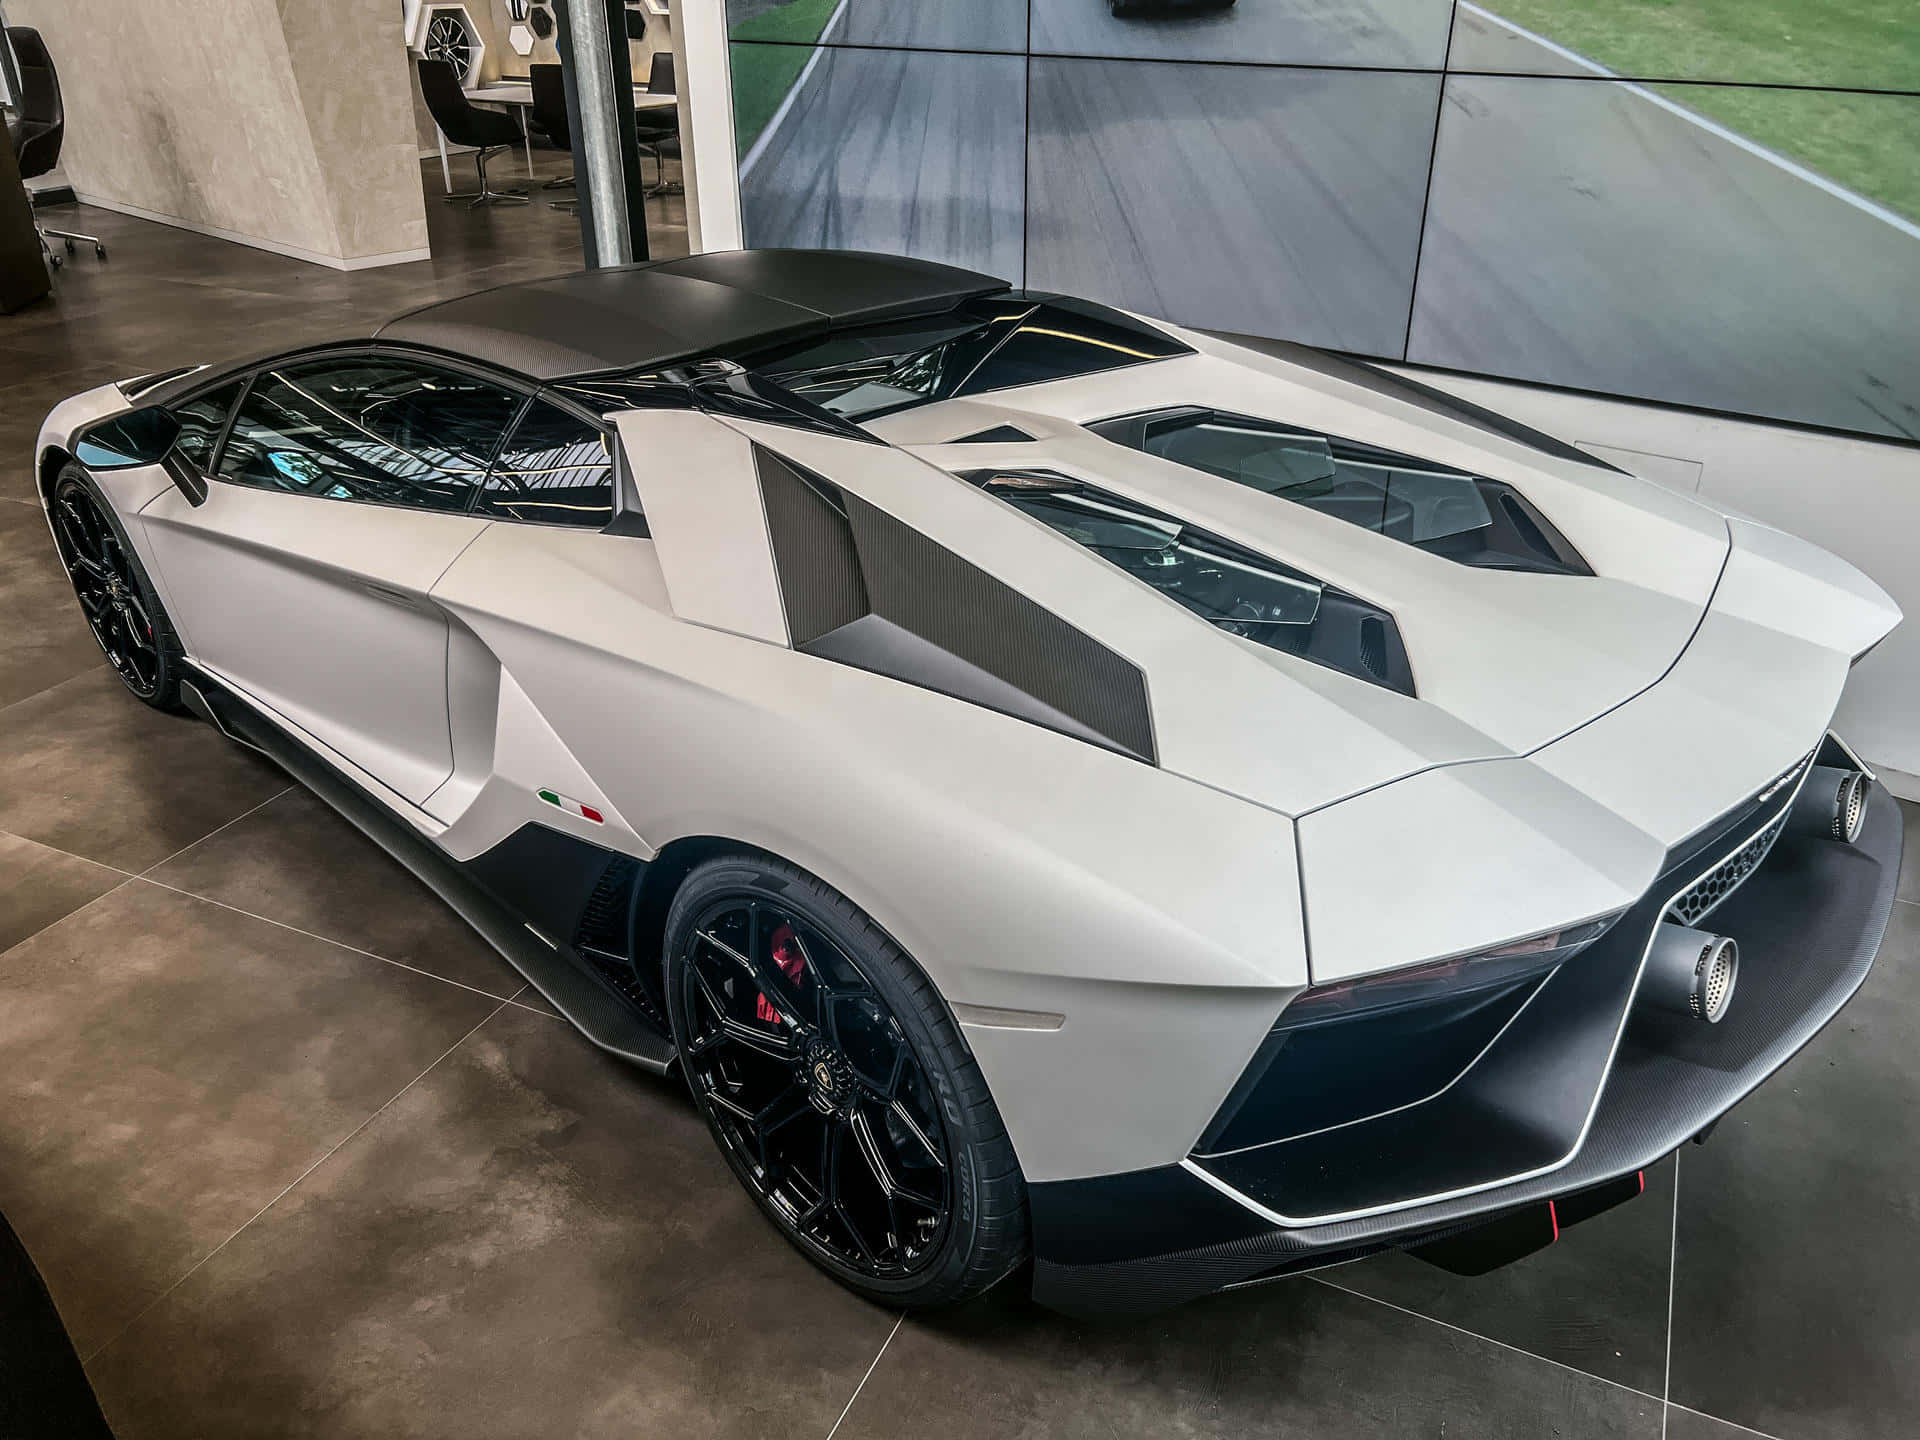 En hvid og sort Lamborghini Huracan parkeres i et showroom.